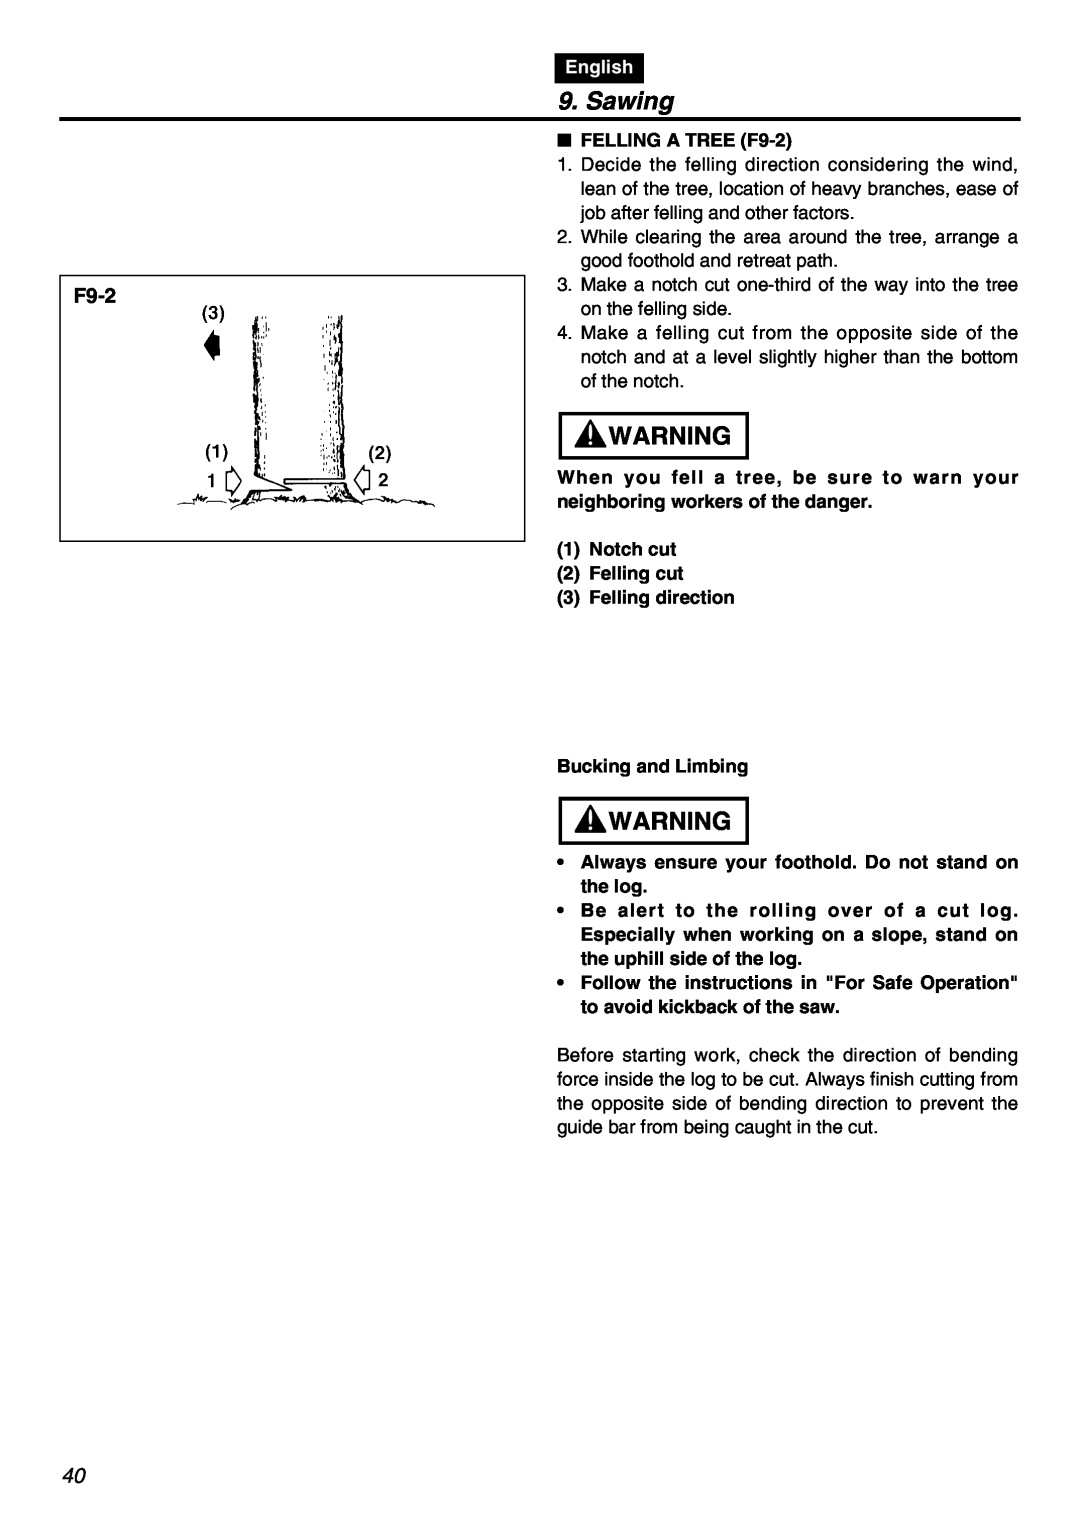 RedMax GZ400 manual F9-2, Sawing, English 